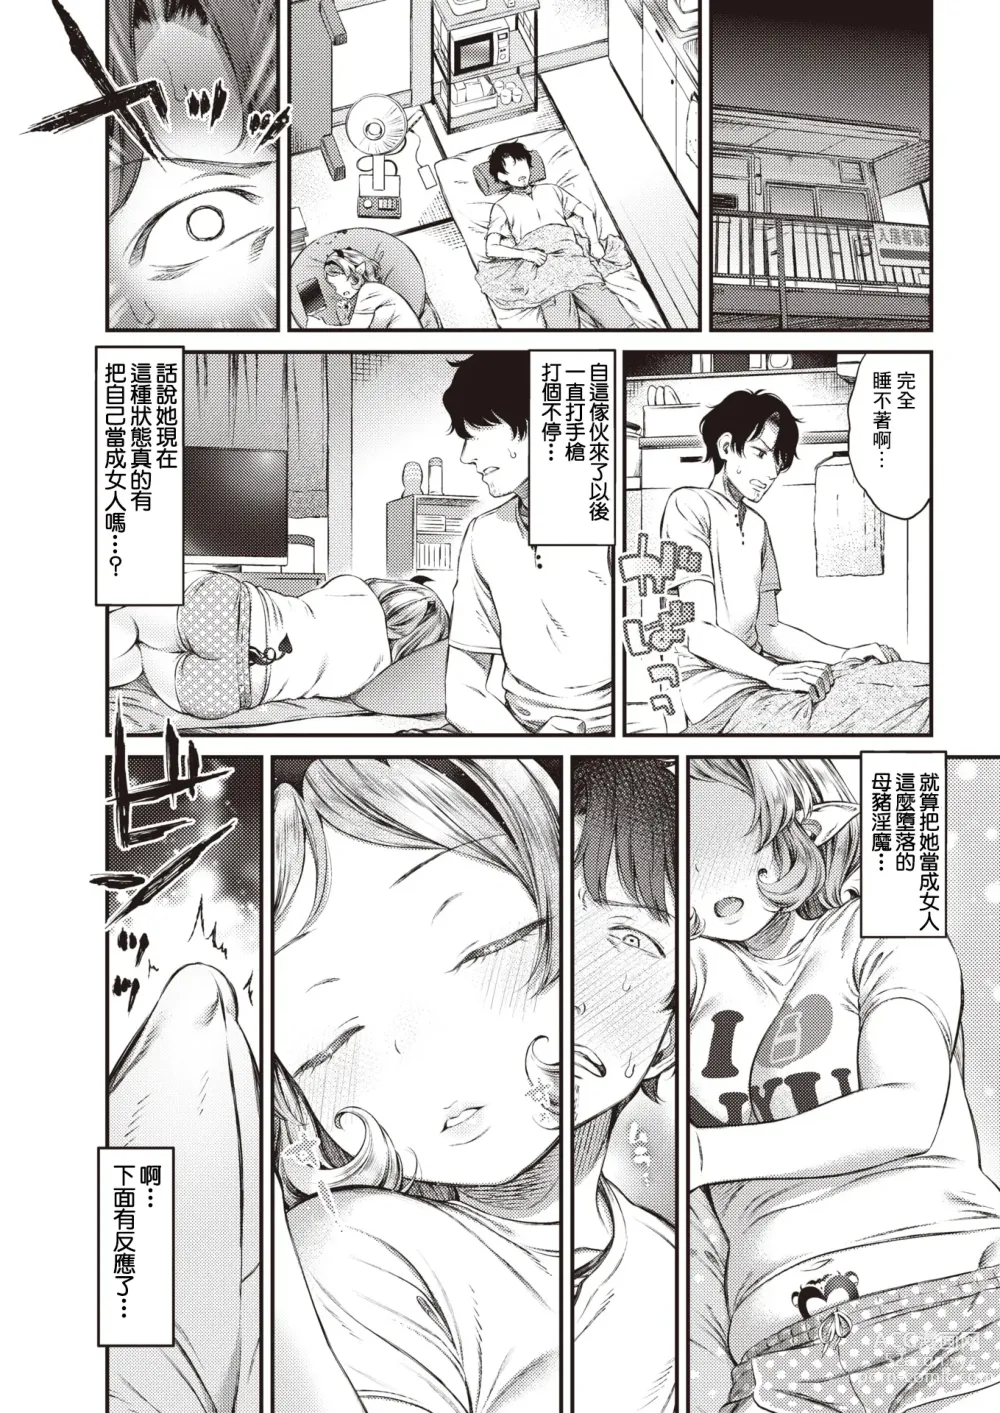 Page 6 of manga Change de